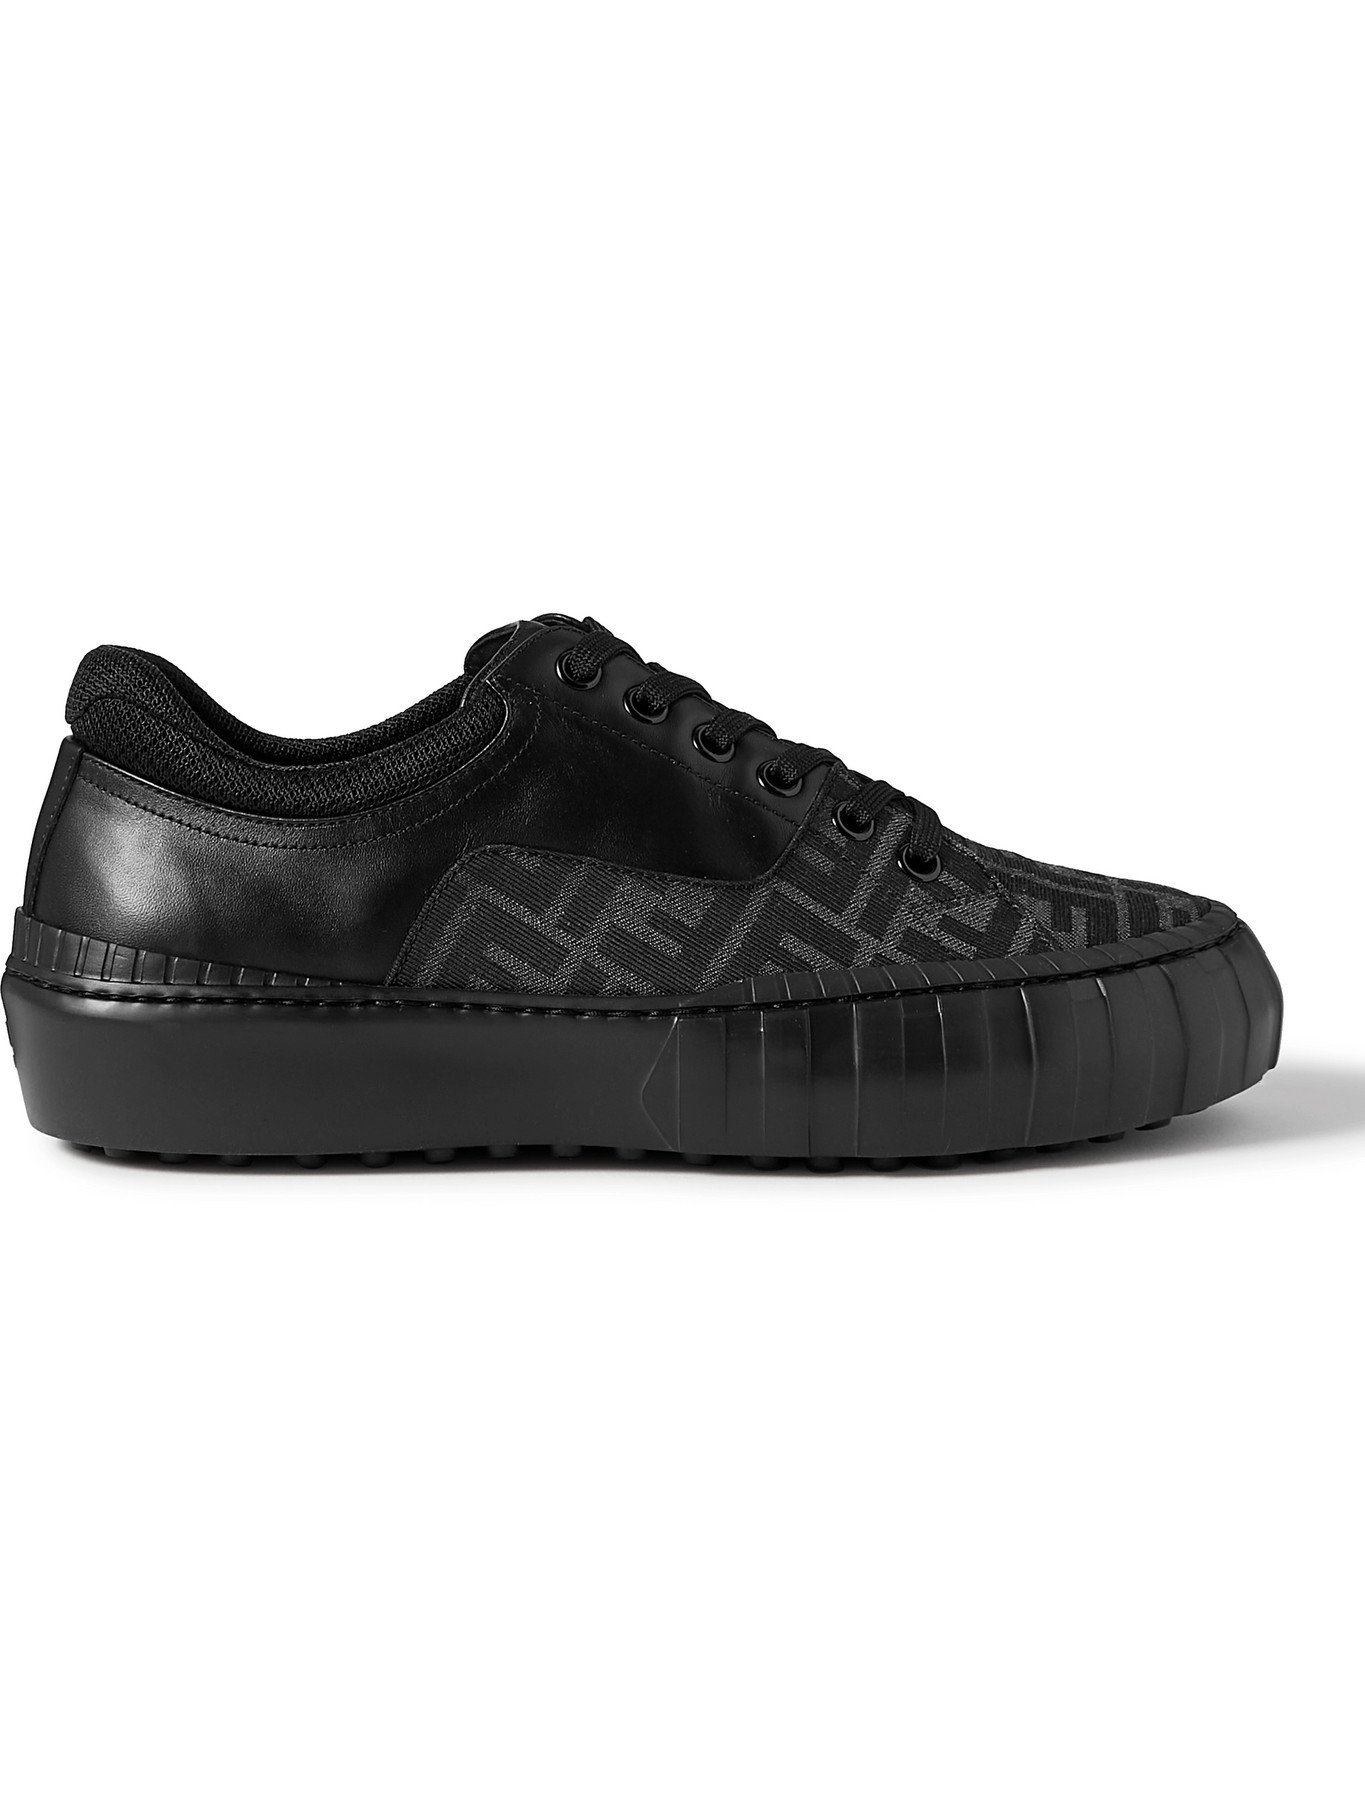 FENDI - Leather and Logo-Jacquard Sneakers - Black Fendi